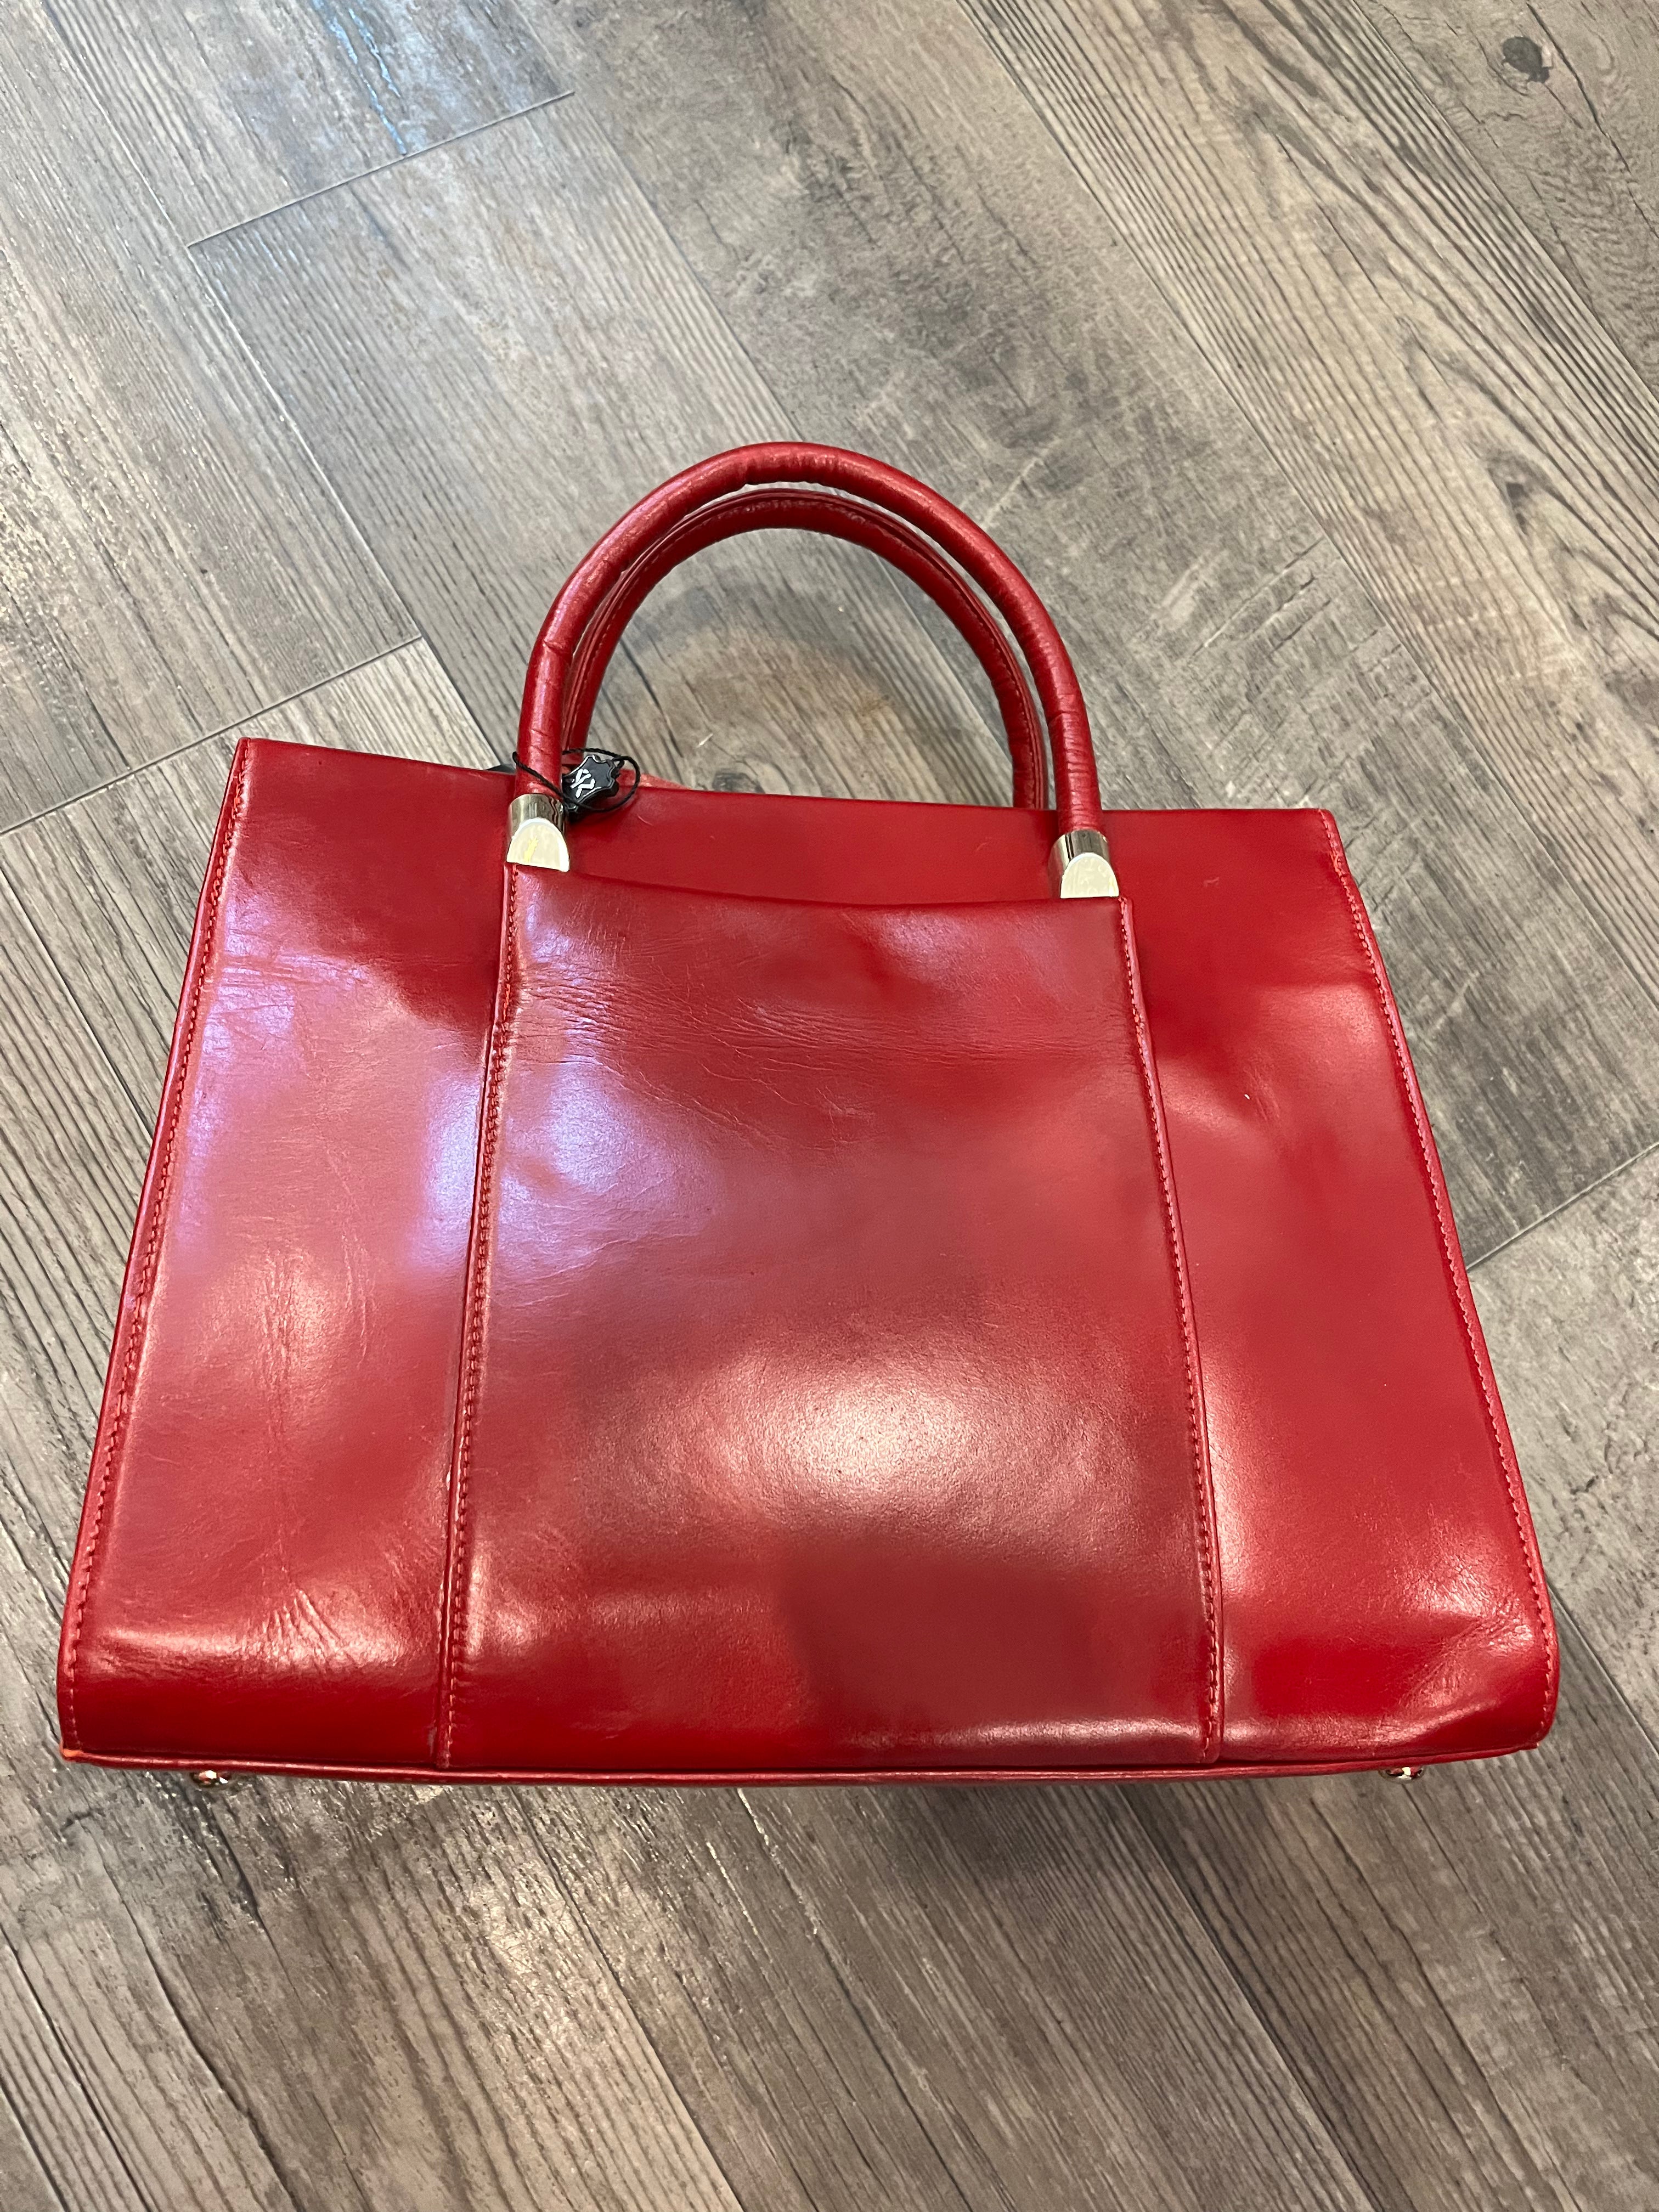 Silver Rose R2121 Red Leather Handbag